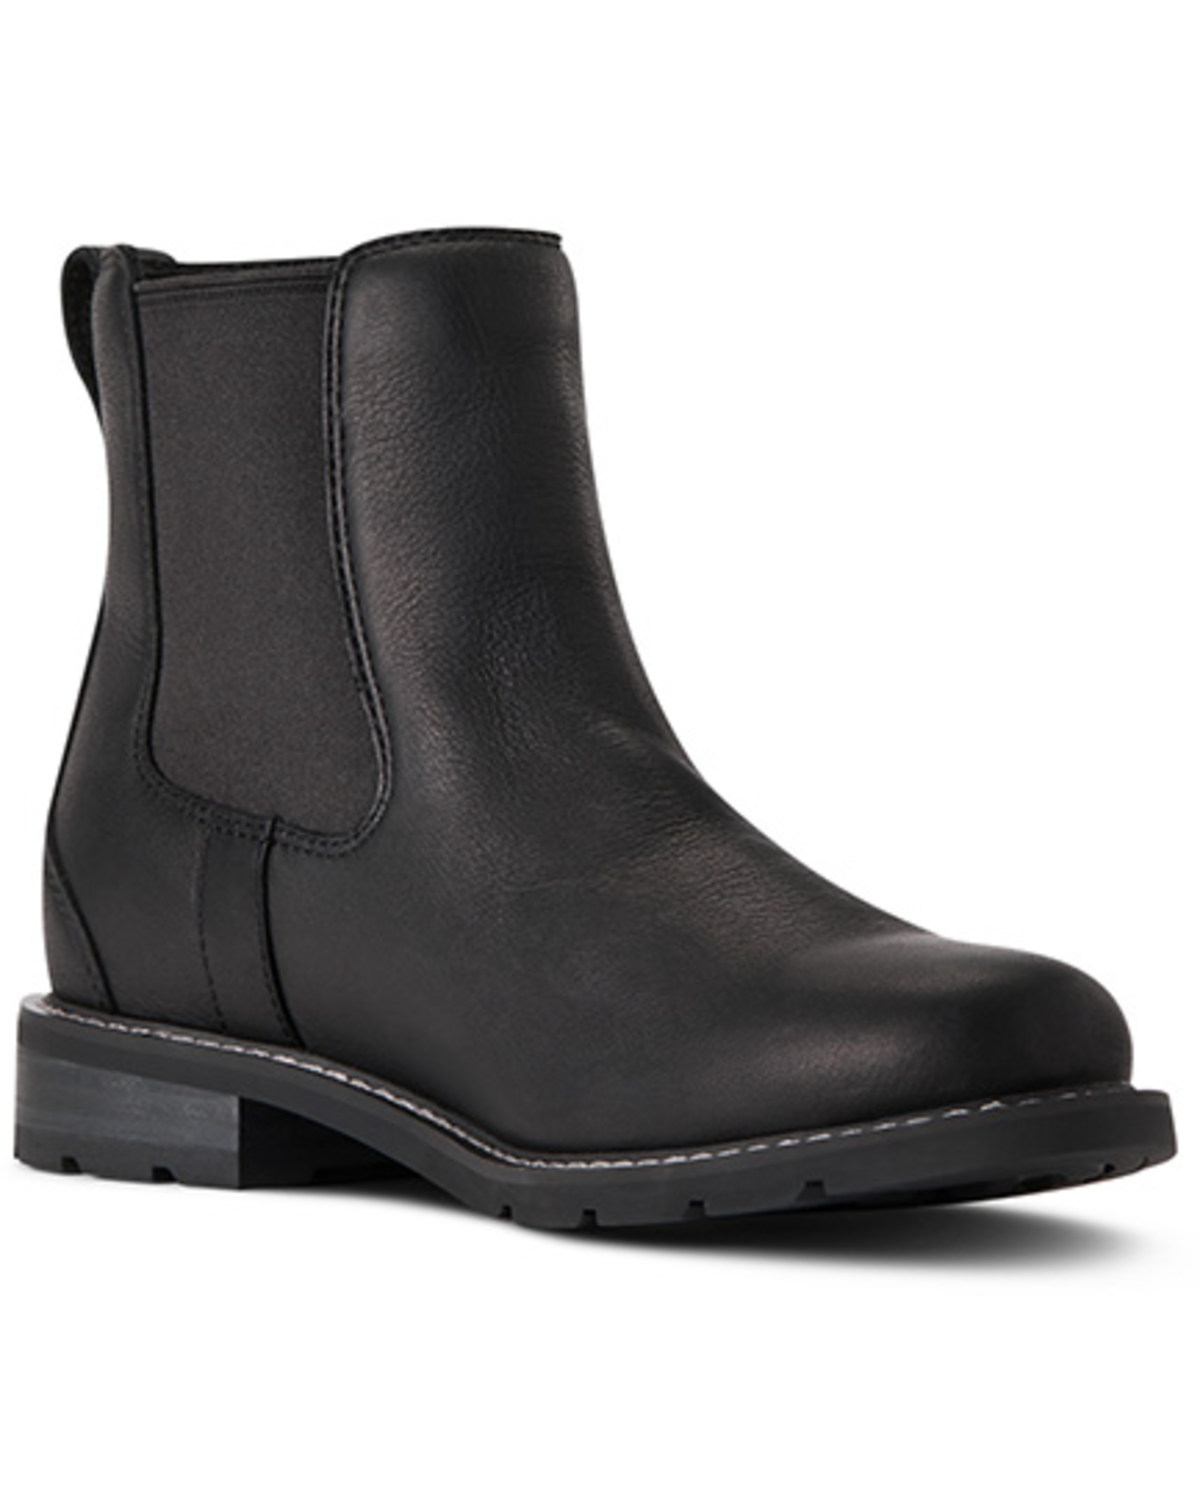 Ariat Women's Wexford Waterproof Chelsea Boots - Medium Toe